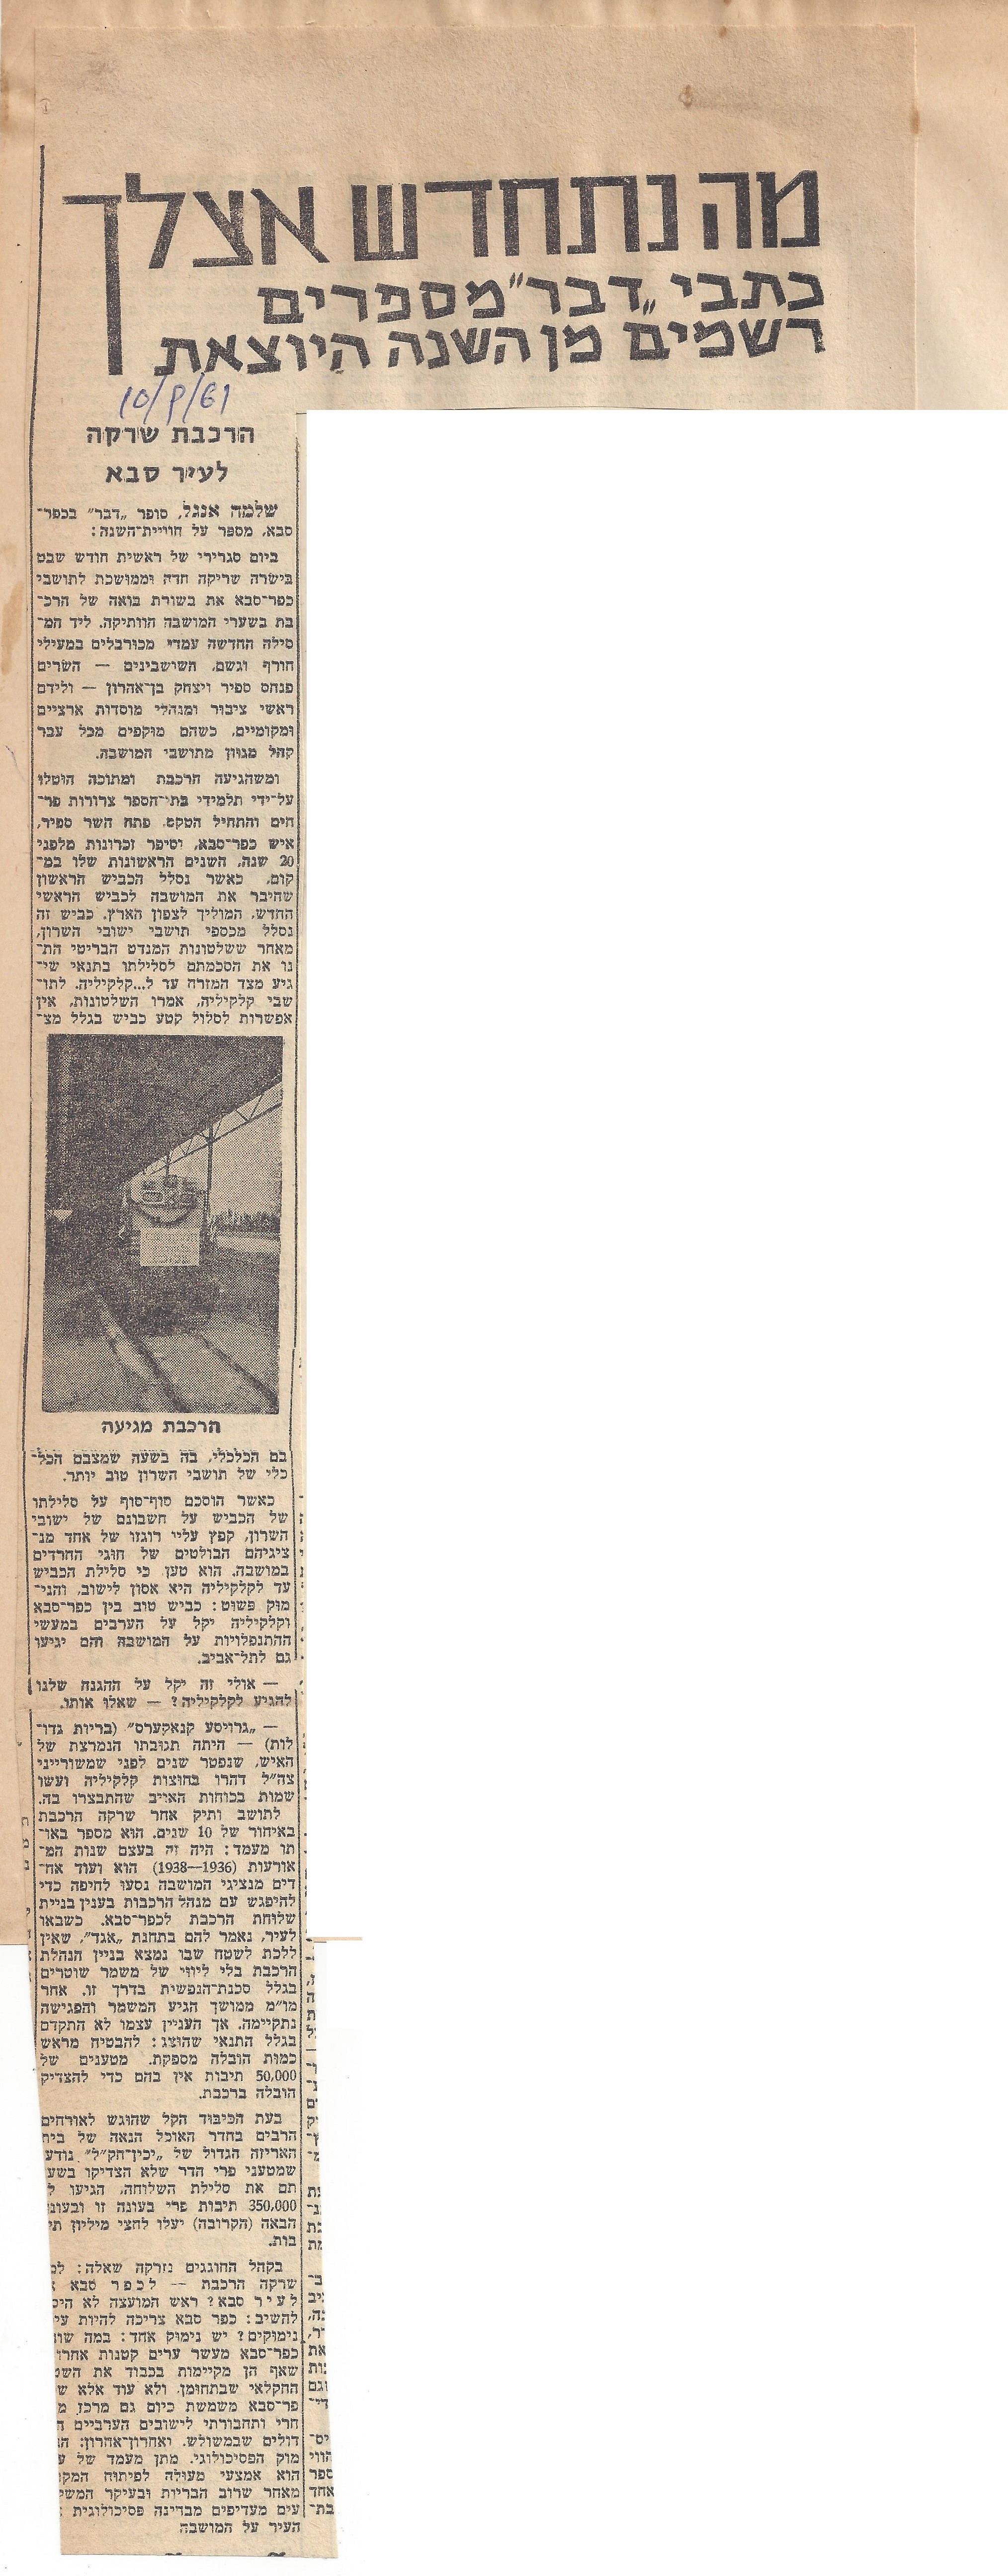 scan of newspaper article by Shlomo Engel, Davar,10/09/1961 p. 11